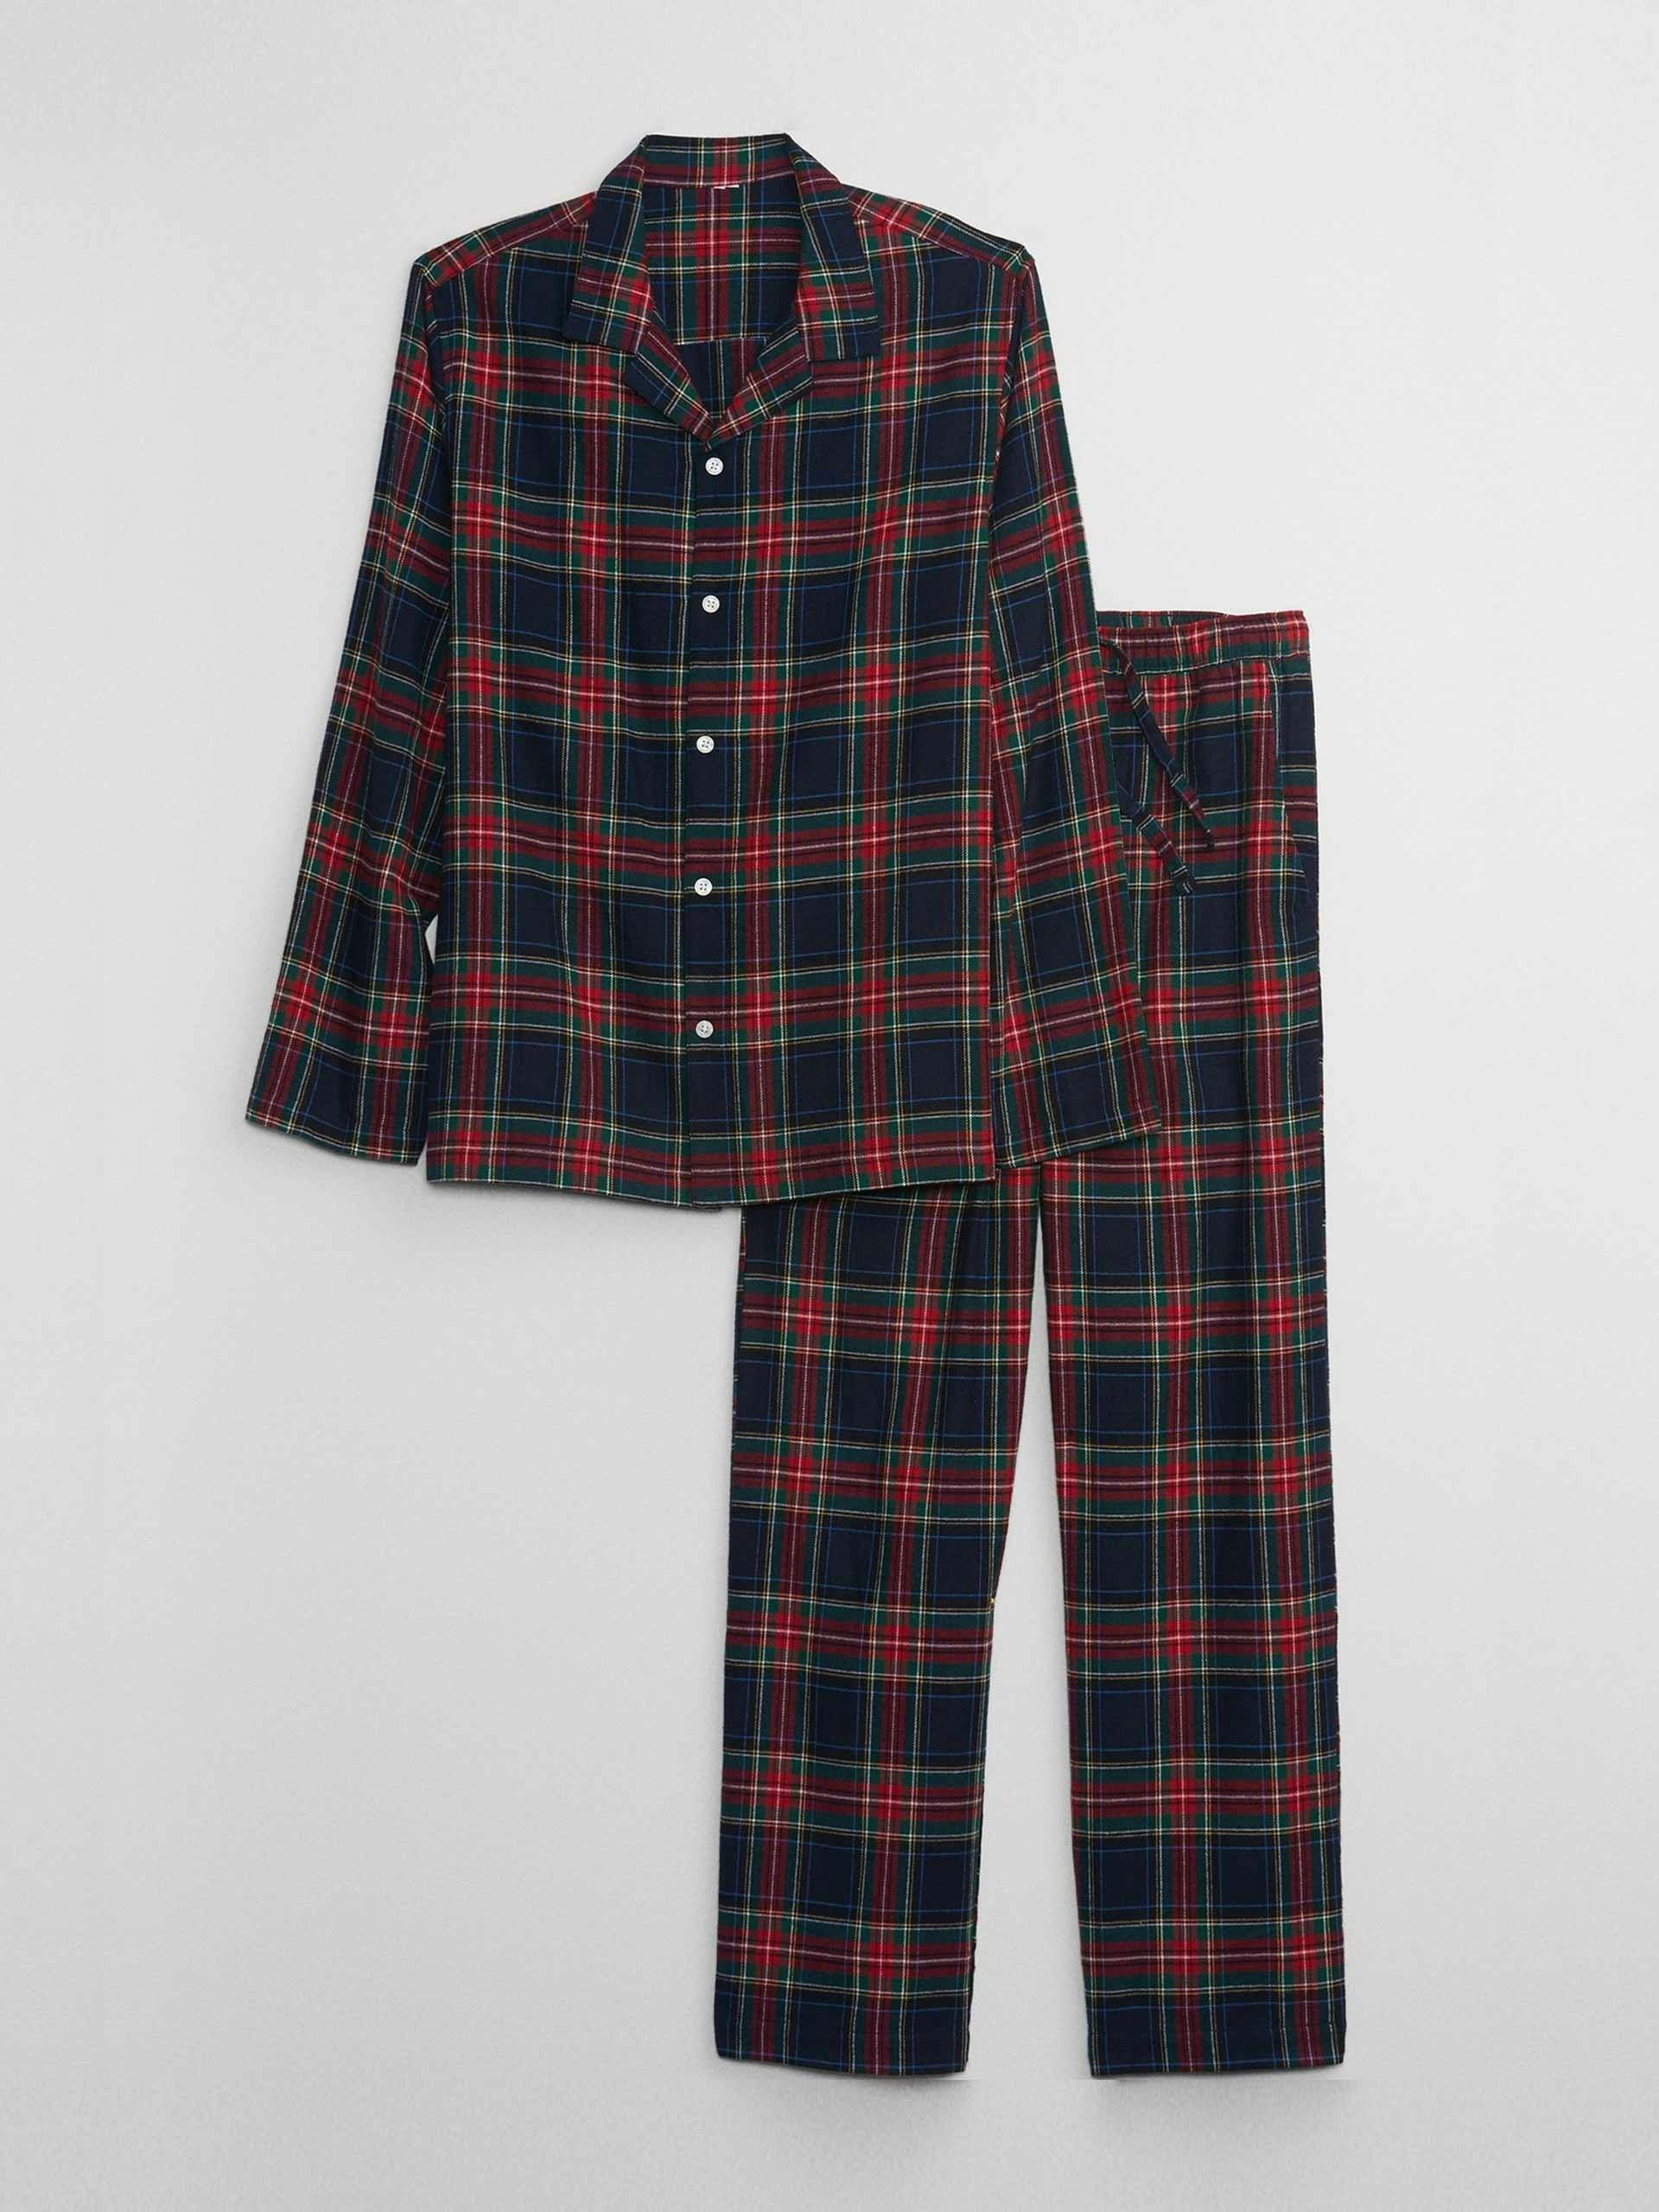 Flannel check long sleeve pyjama shirt & bottoms